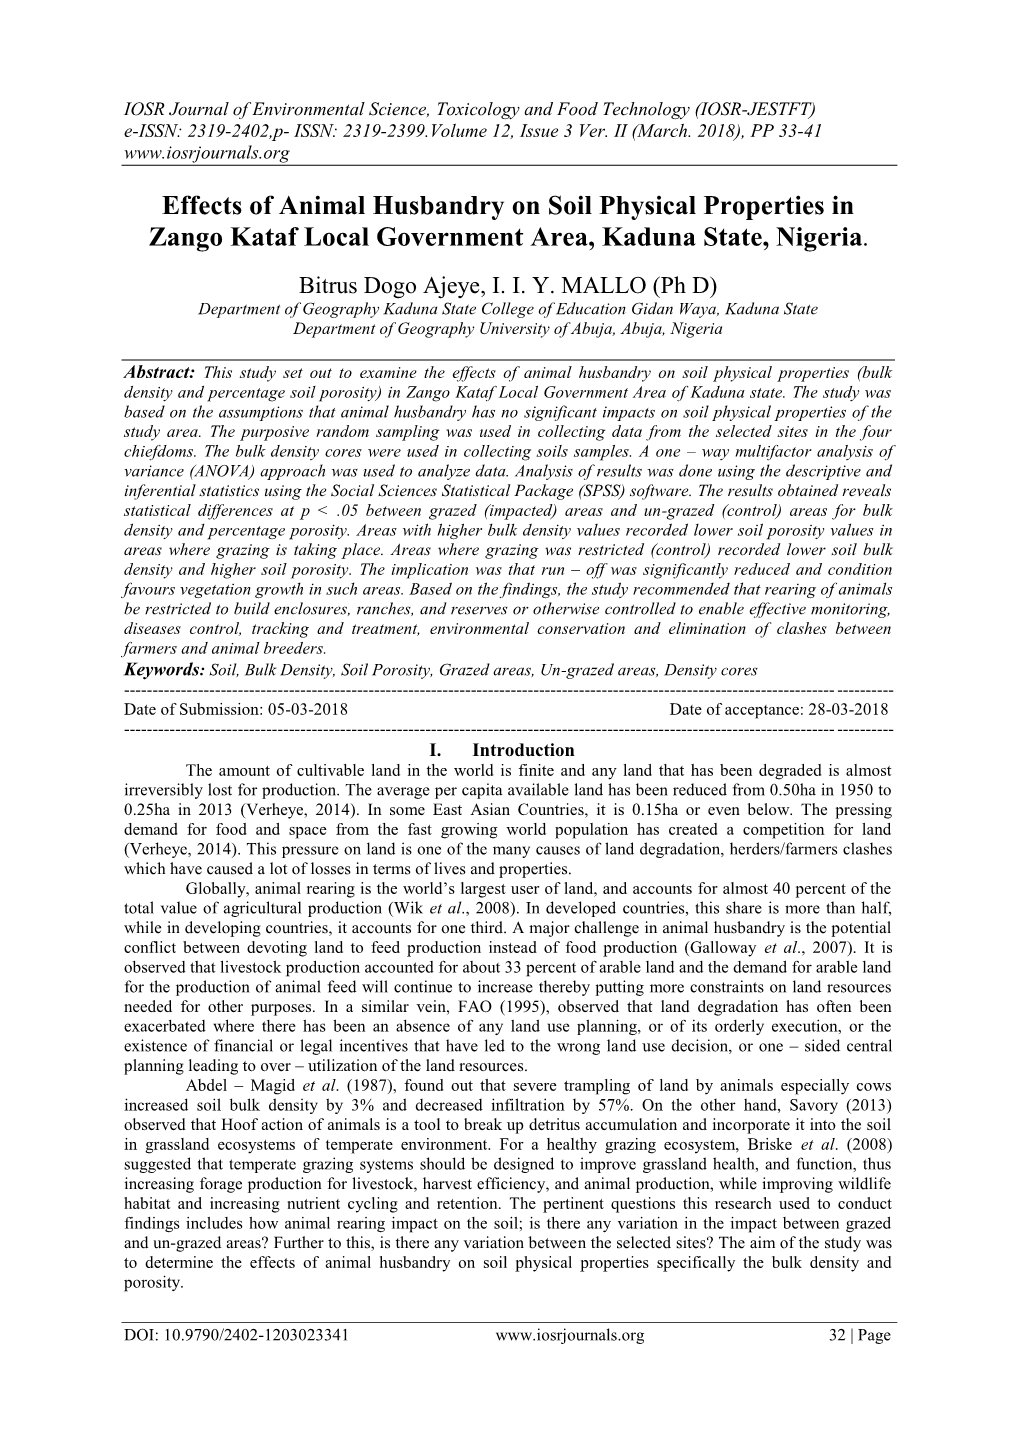 Effects of Animal Husbandry on Soil Physical Properties in Zango Kataf Local Government Area, Kaduna State, Nigeria